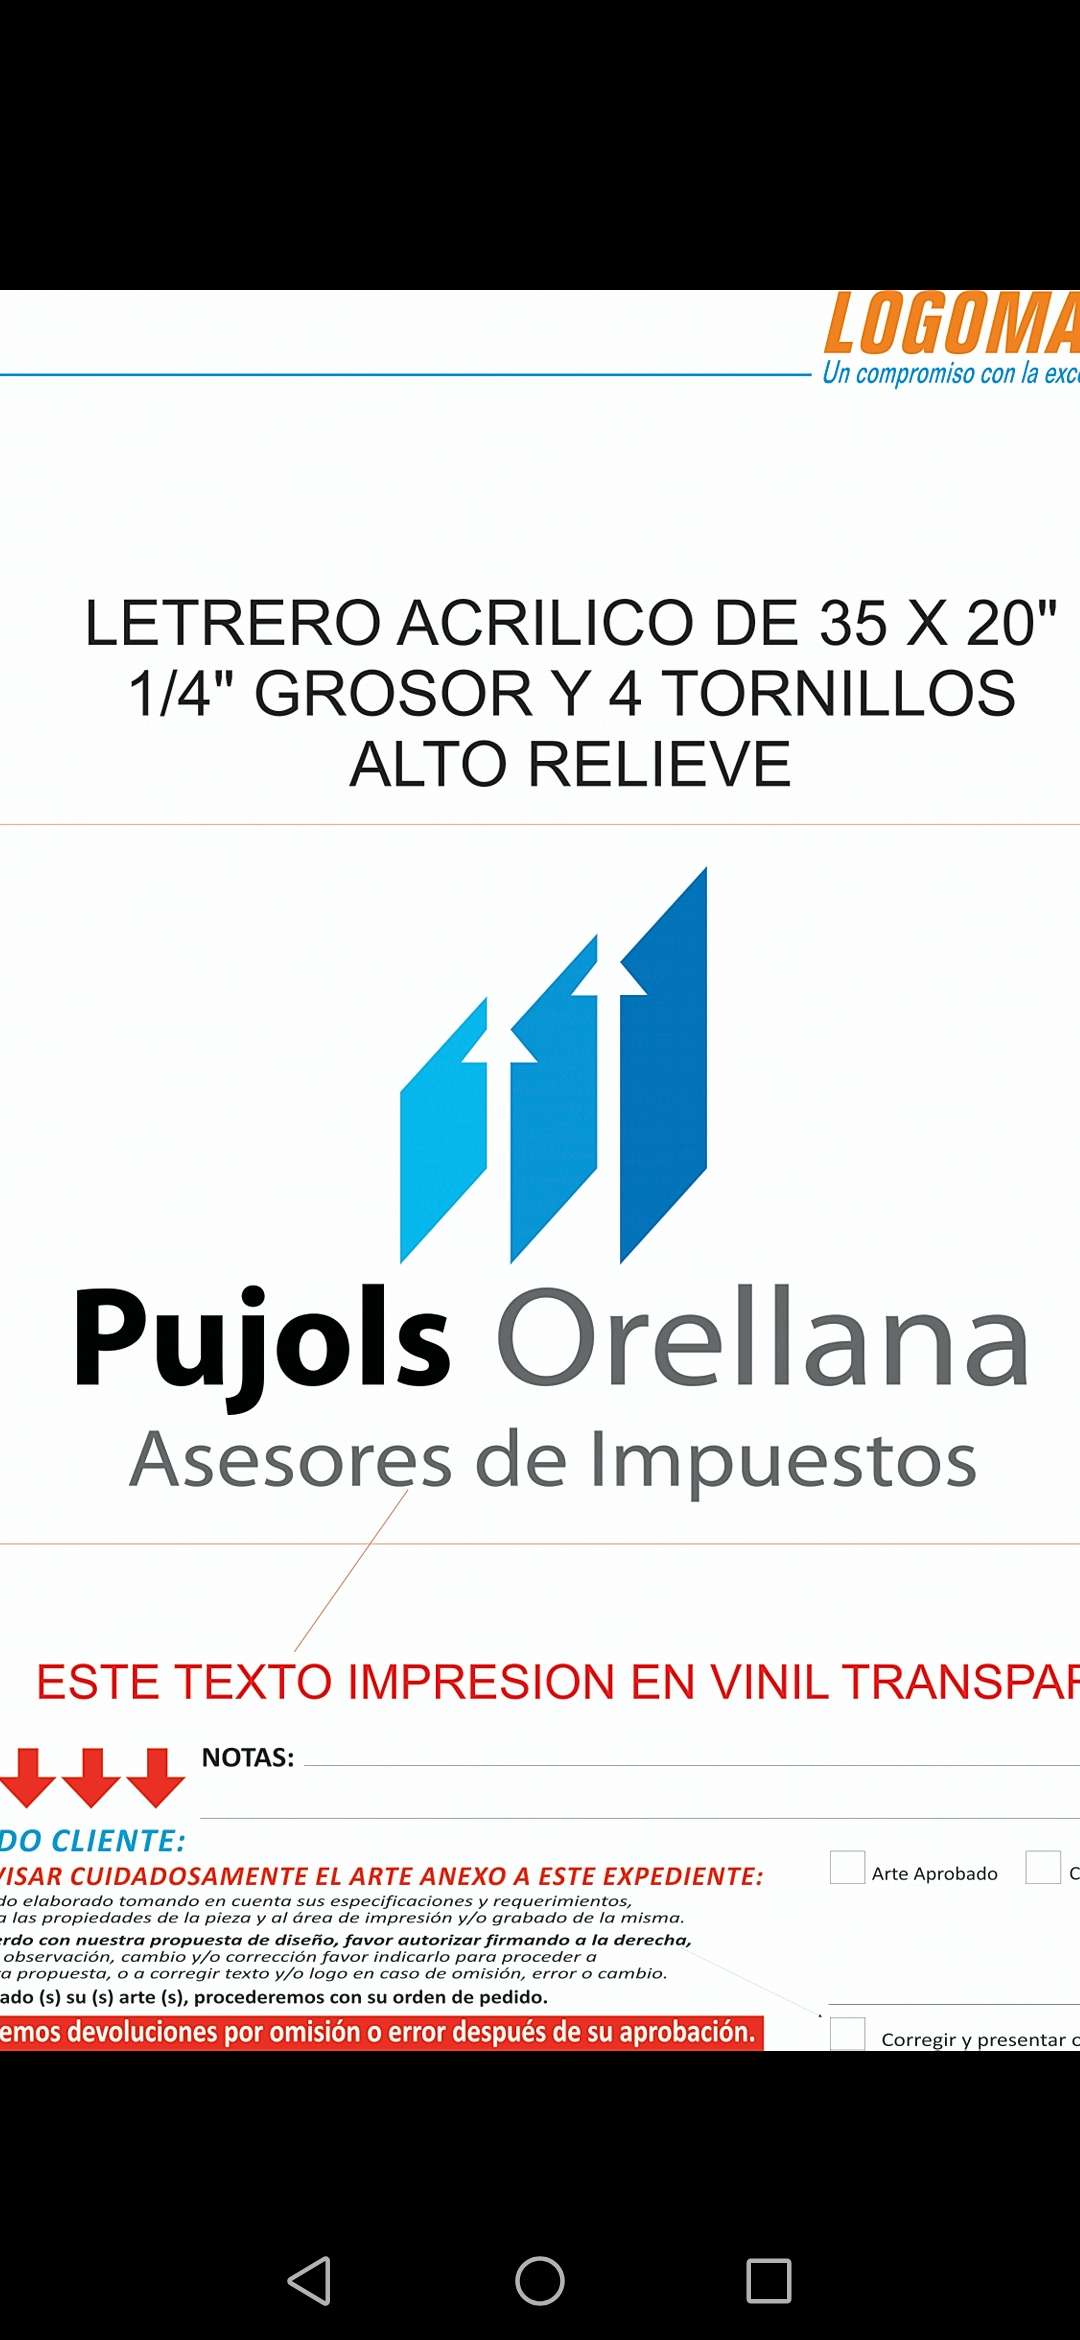 Pujols Orellana Asesores, SRL - Las Lomas - Soporte administrativo